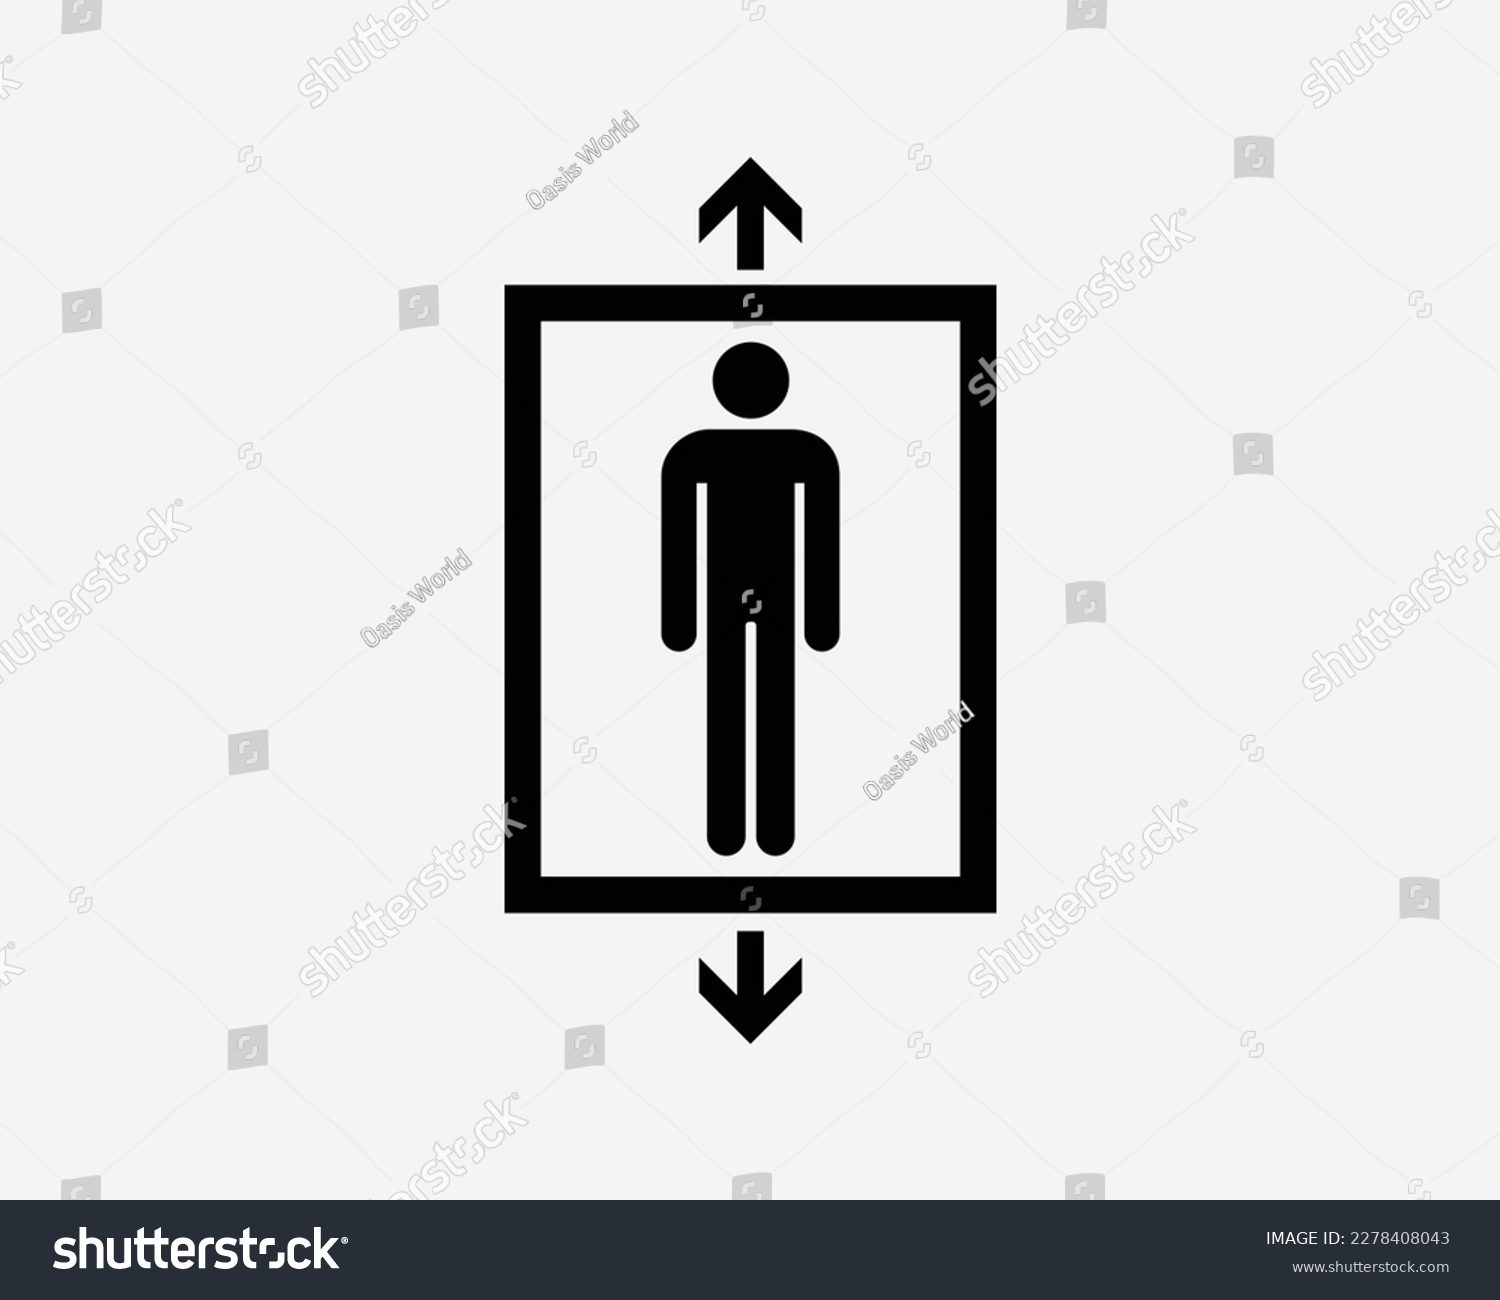 SVG of Elevator Icon Lift Arrow Up Down Man Person Stick Figure Vector Black White Silhouette Symbol Sign Graphic Clipart Artwork Illustration Pictogram svg